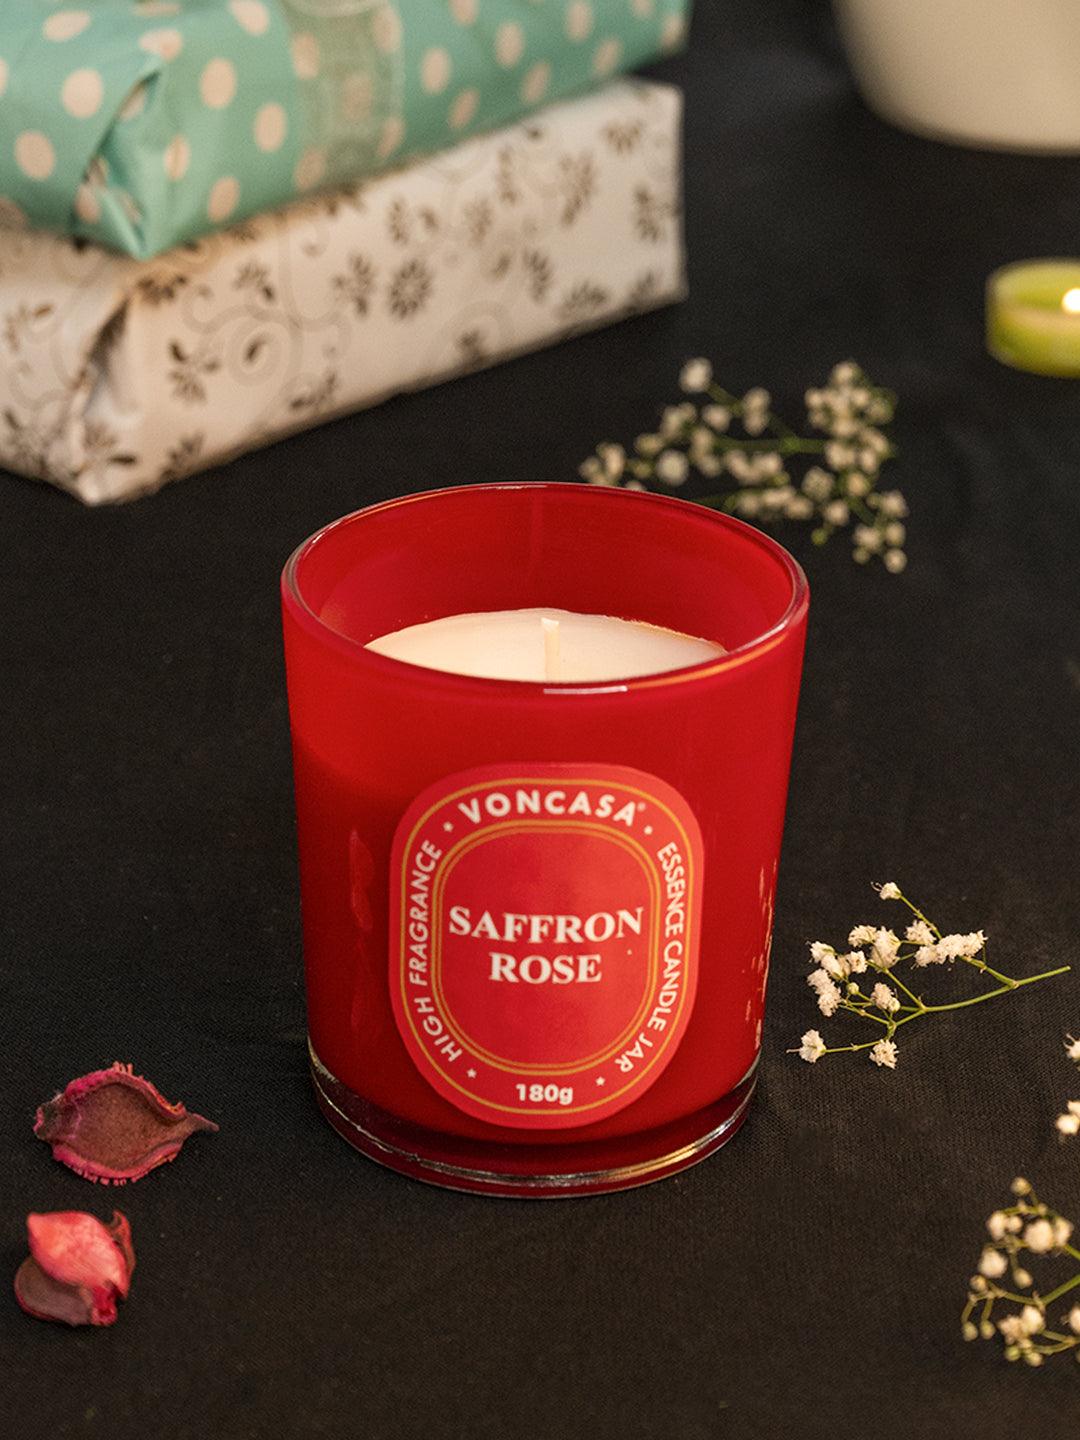 VON CASA Saffron Rose Candle